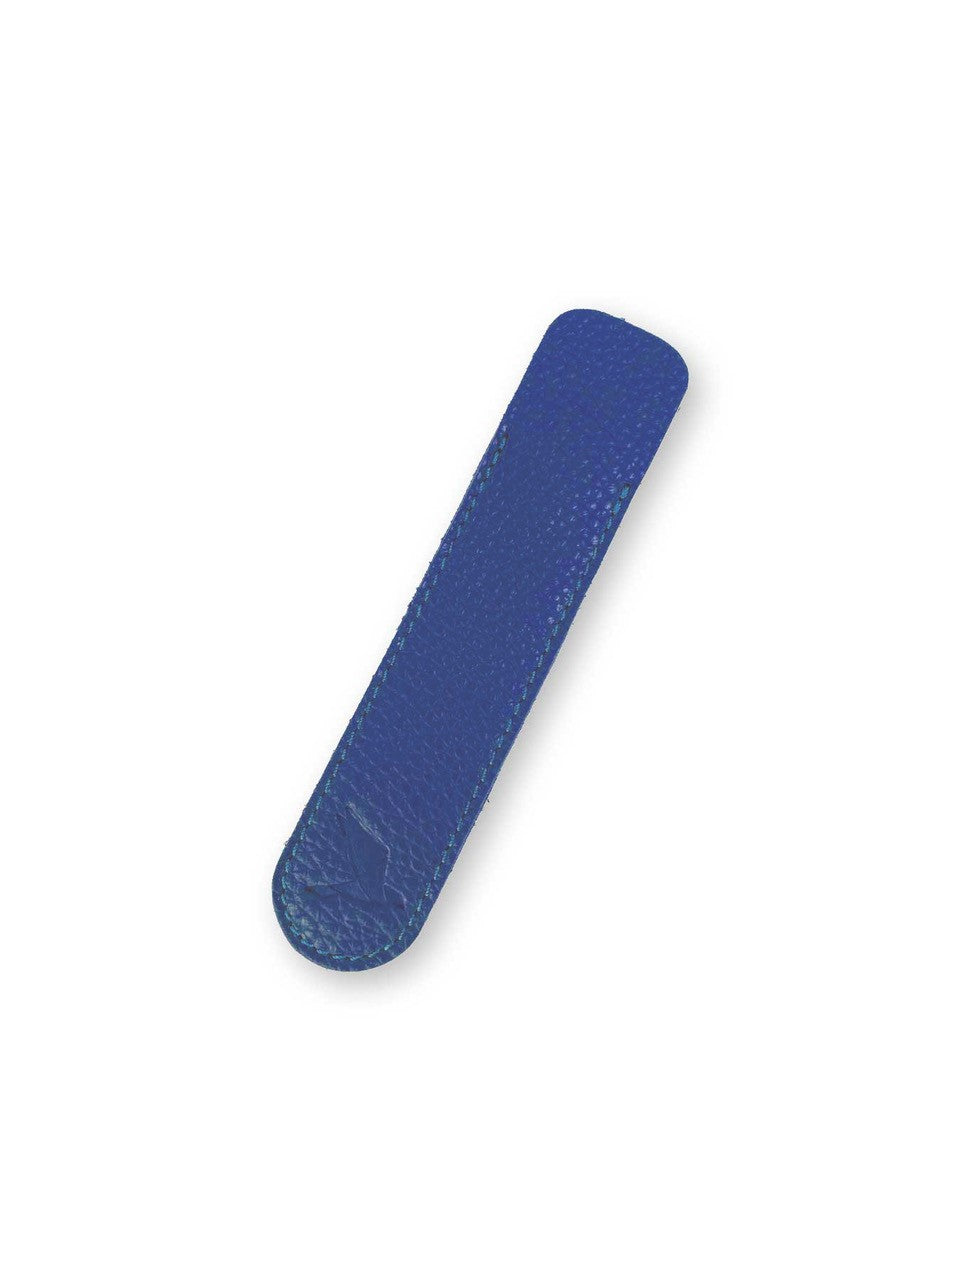 Pencil case (blue) Swiss Made